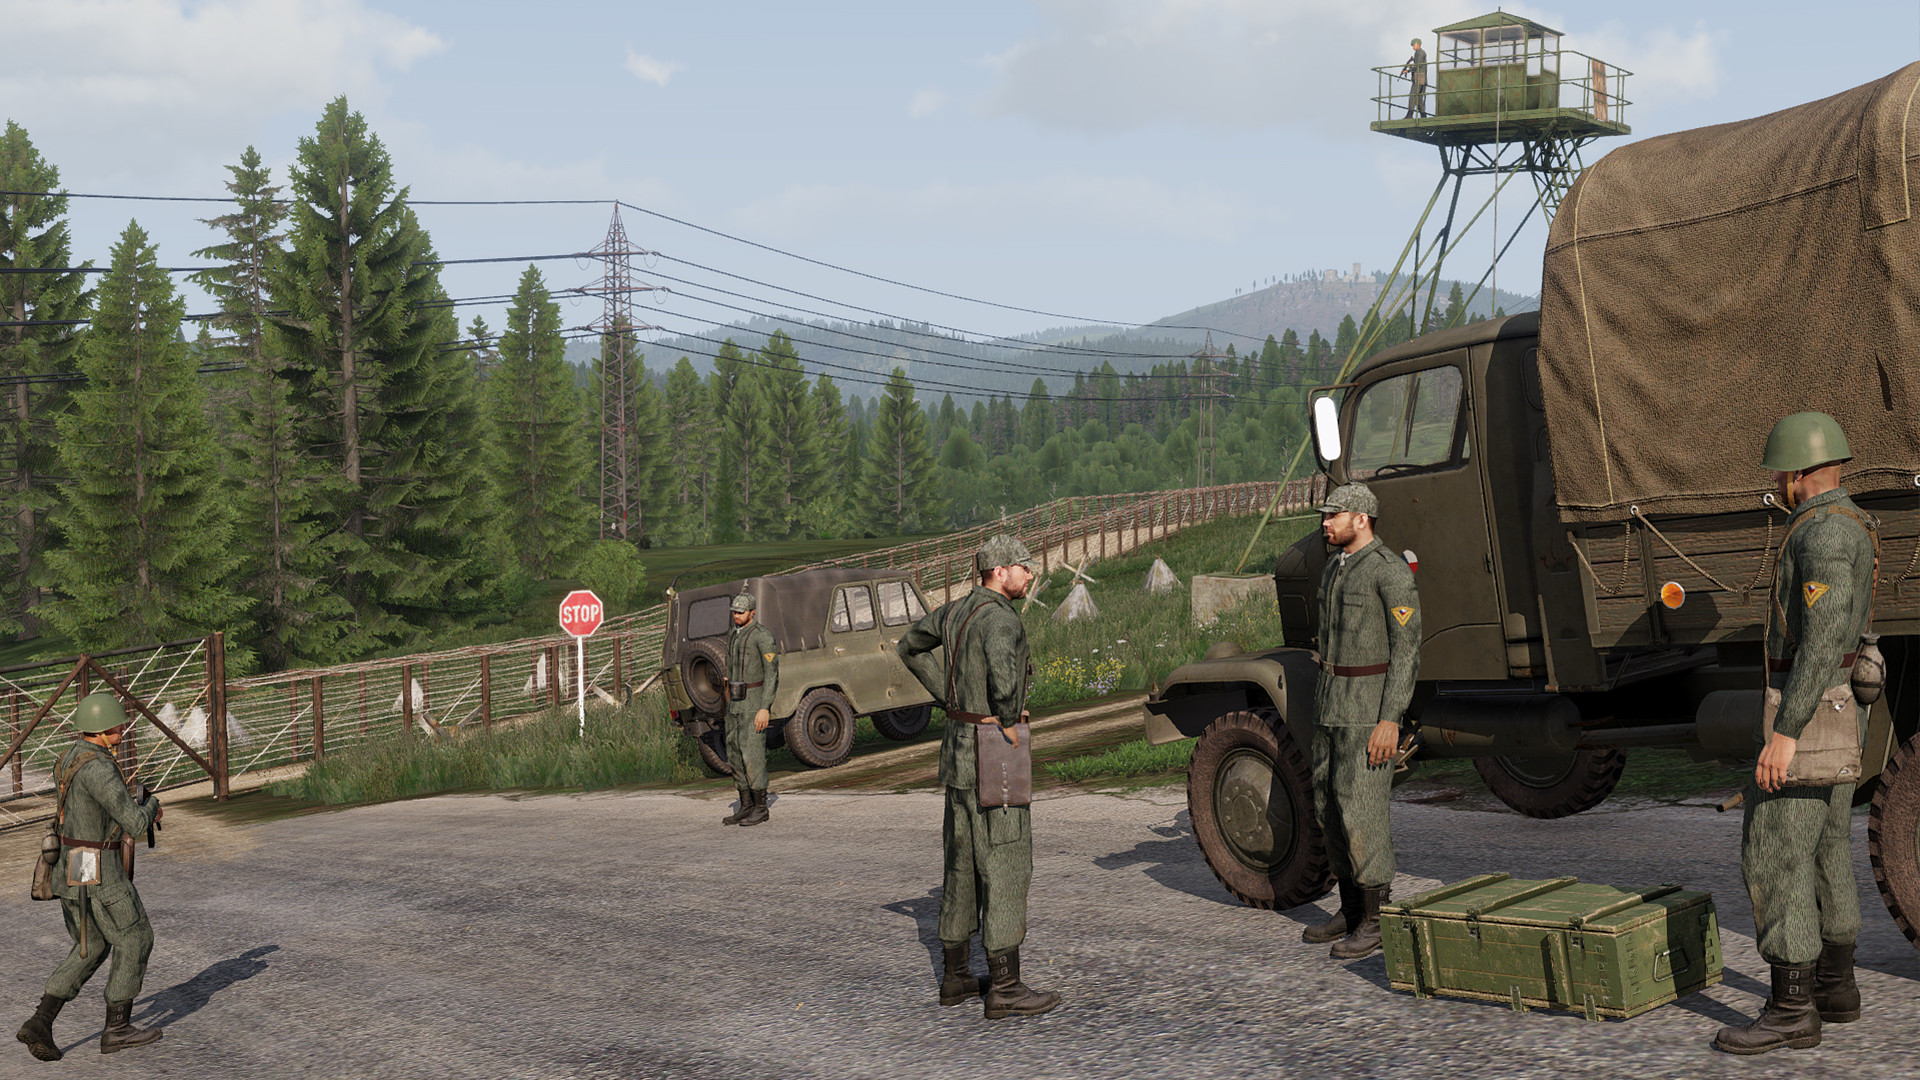 Arma 3 Creator DLC: CSLA Iron Curtain at the best price